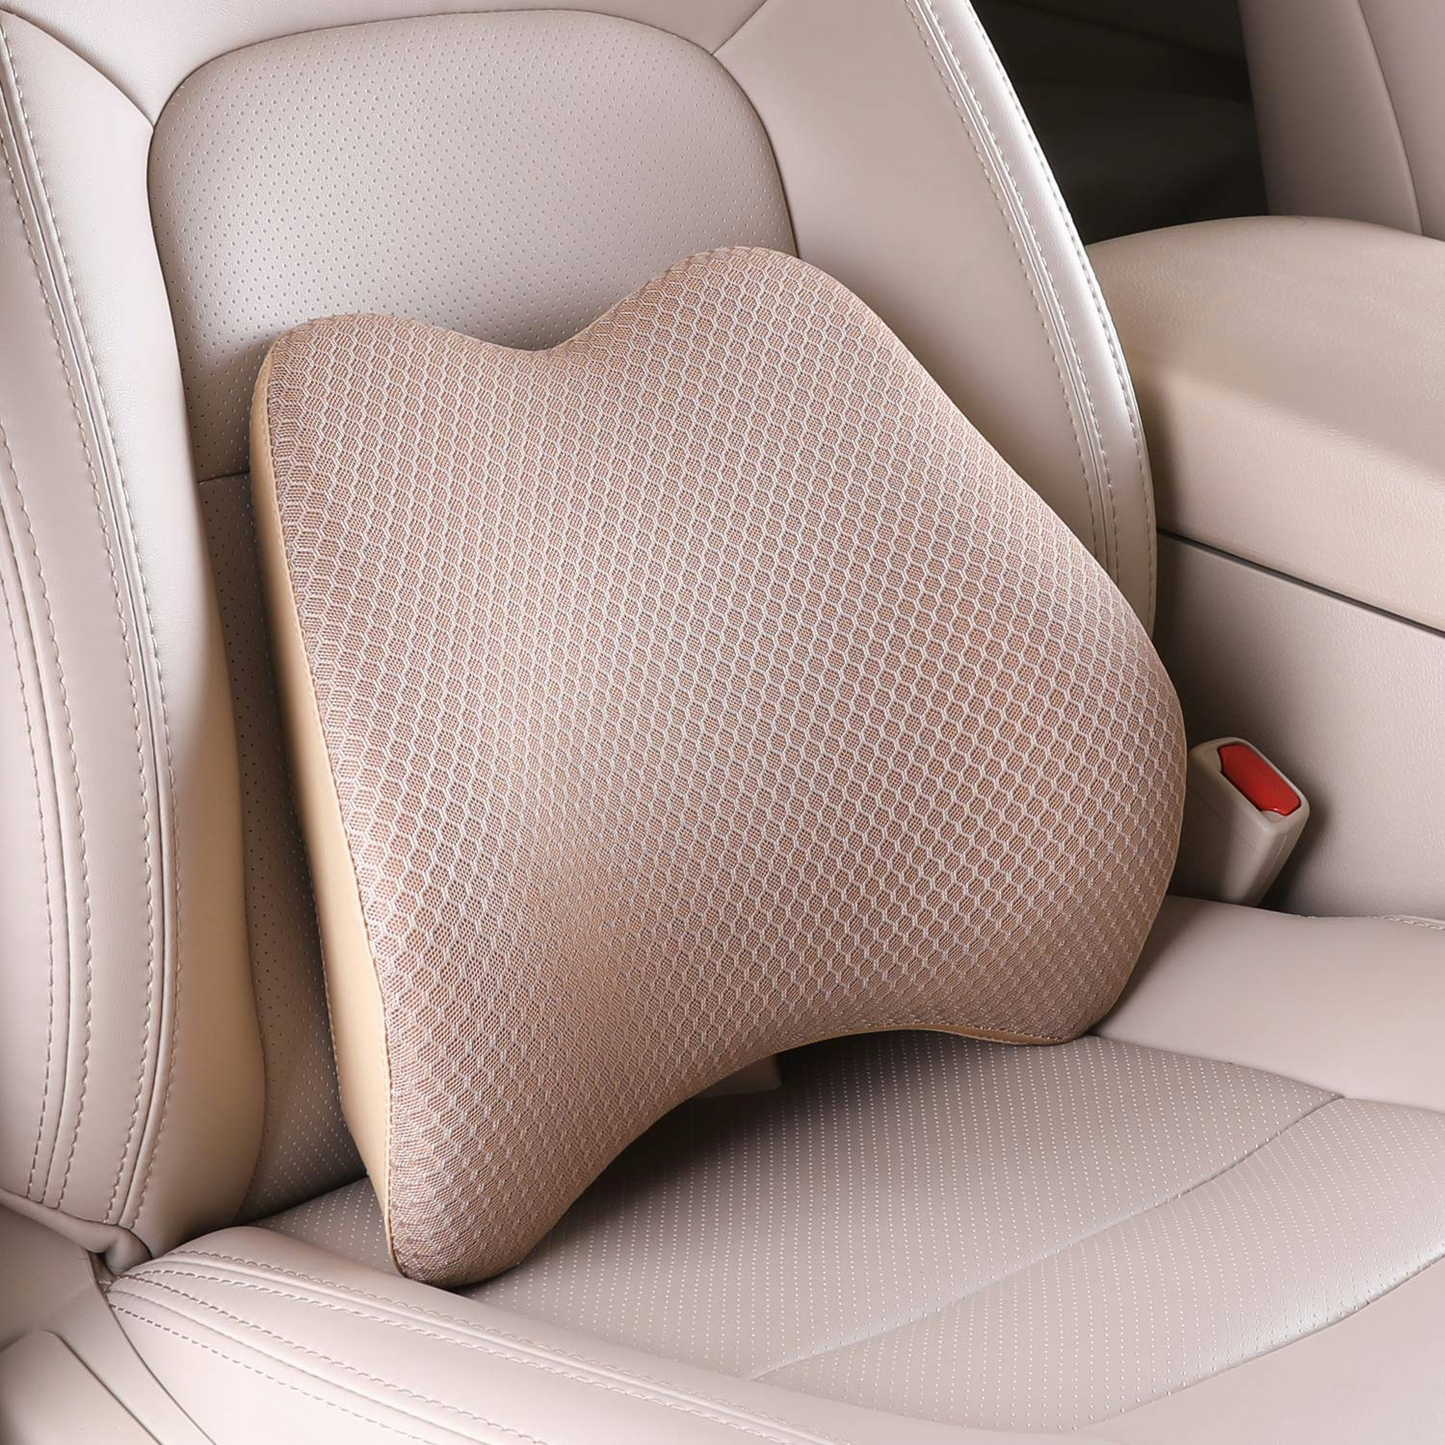 Truck Seat Cushions: Lumbar Support Seat Cushion